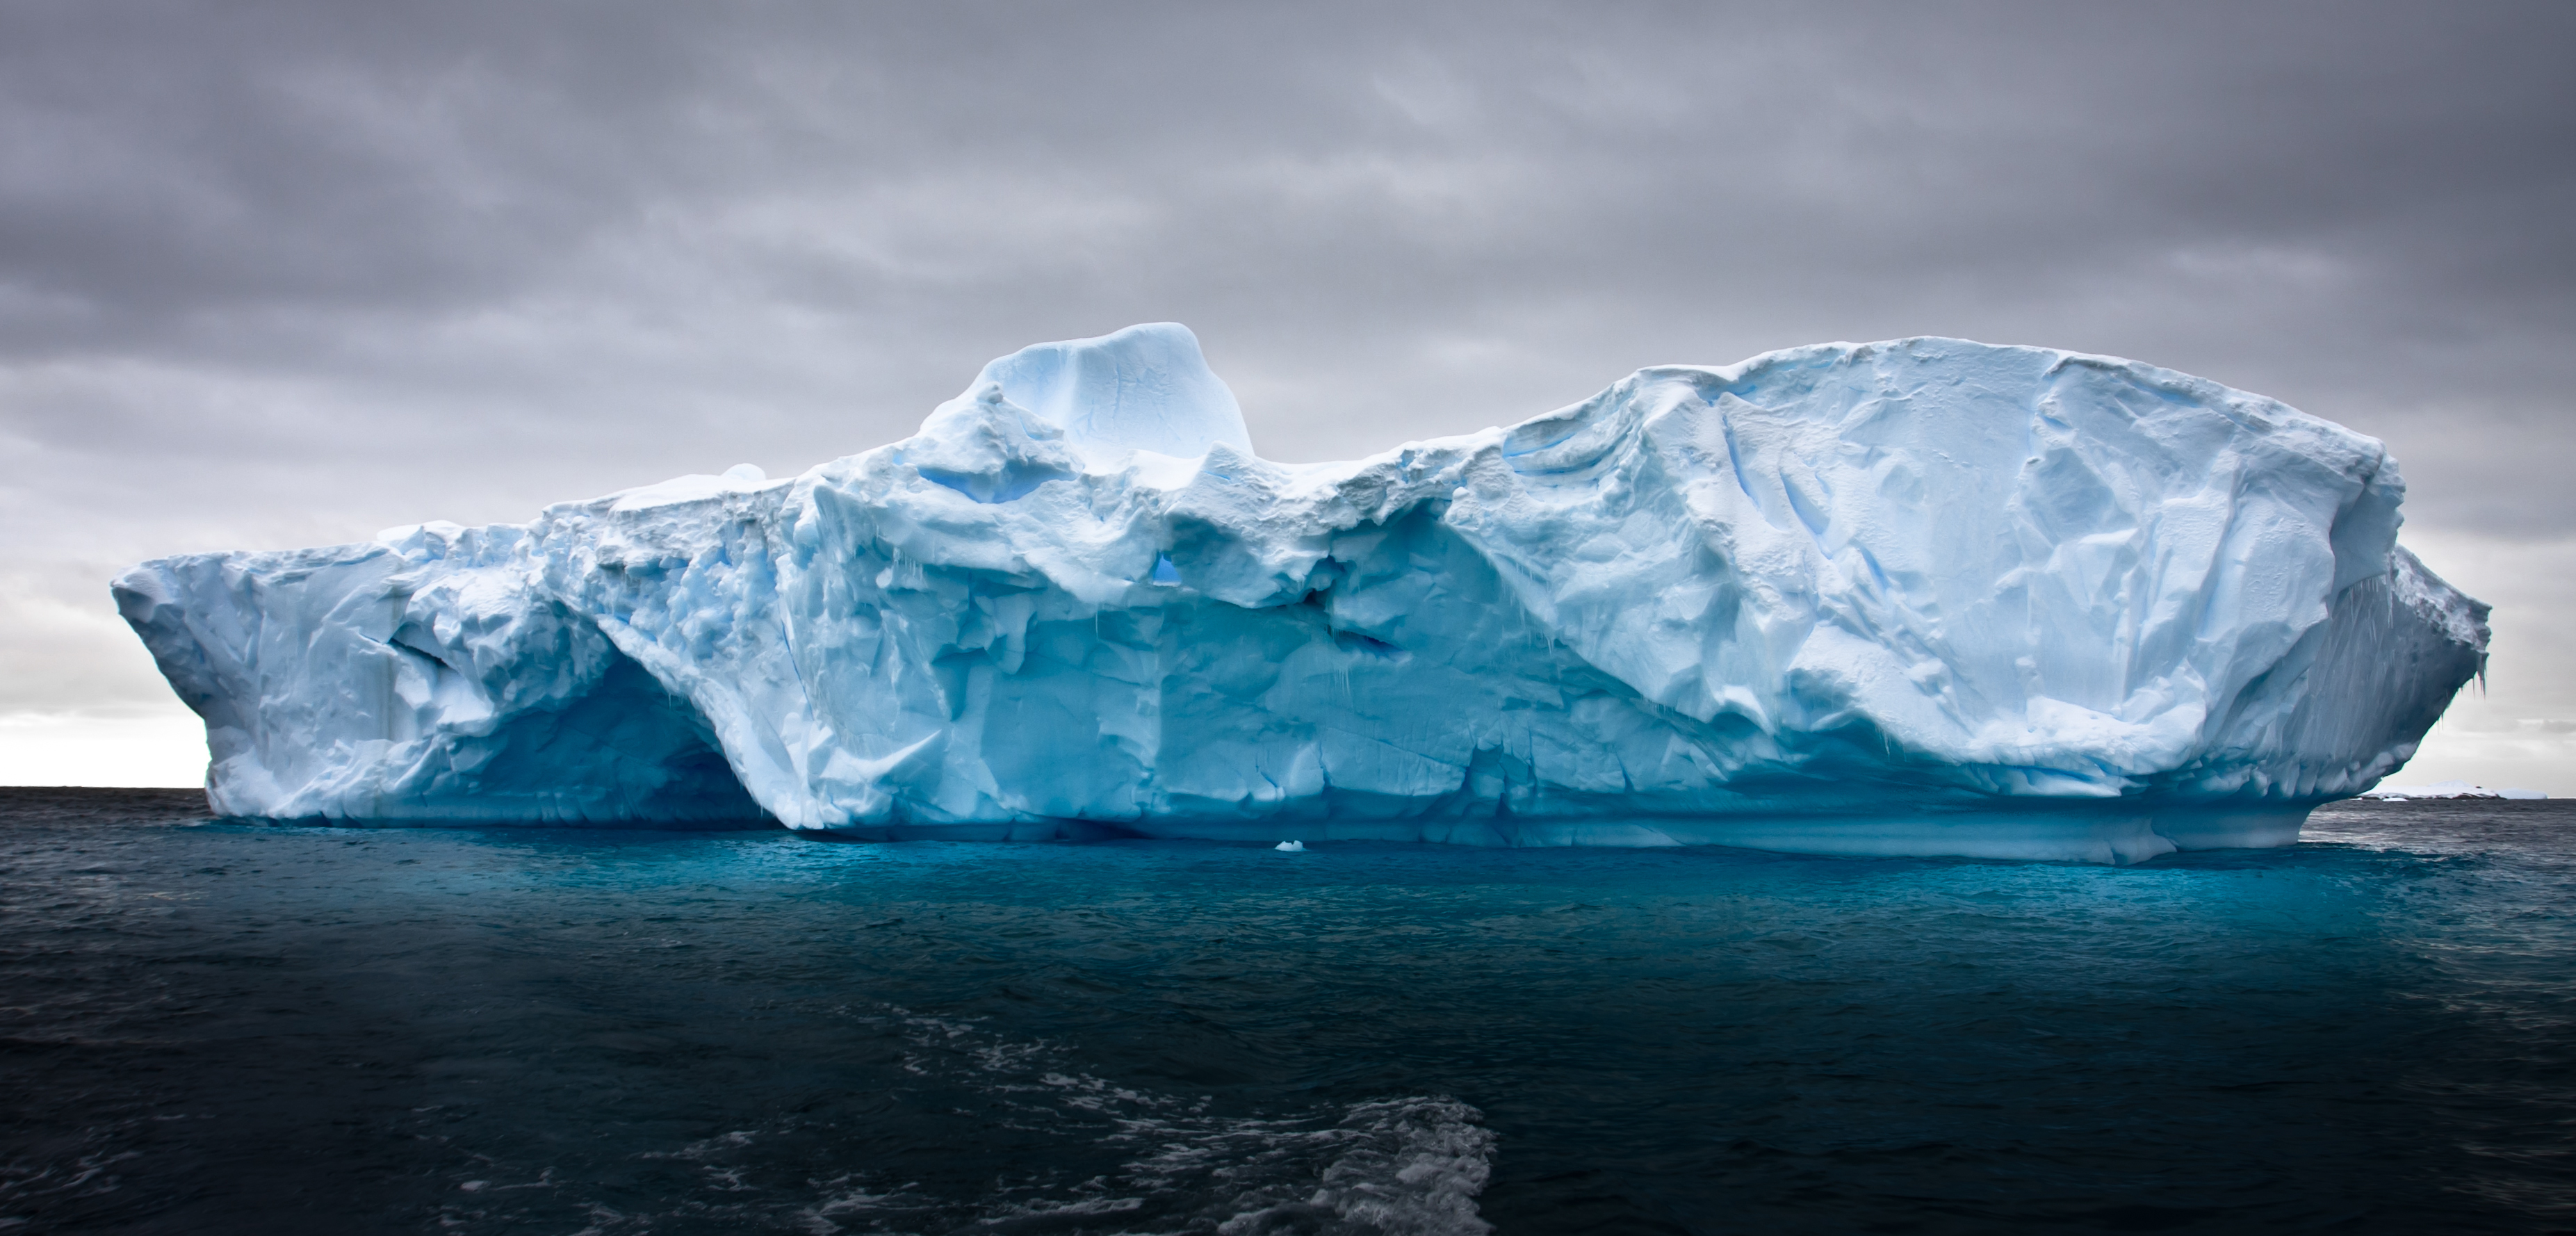 Iceberg Desktop Wallpaper Free